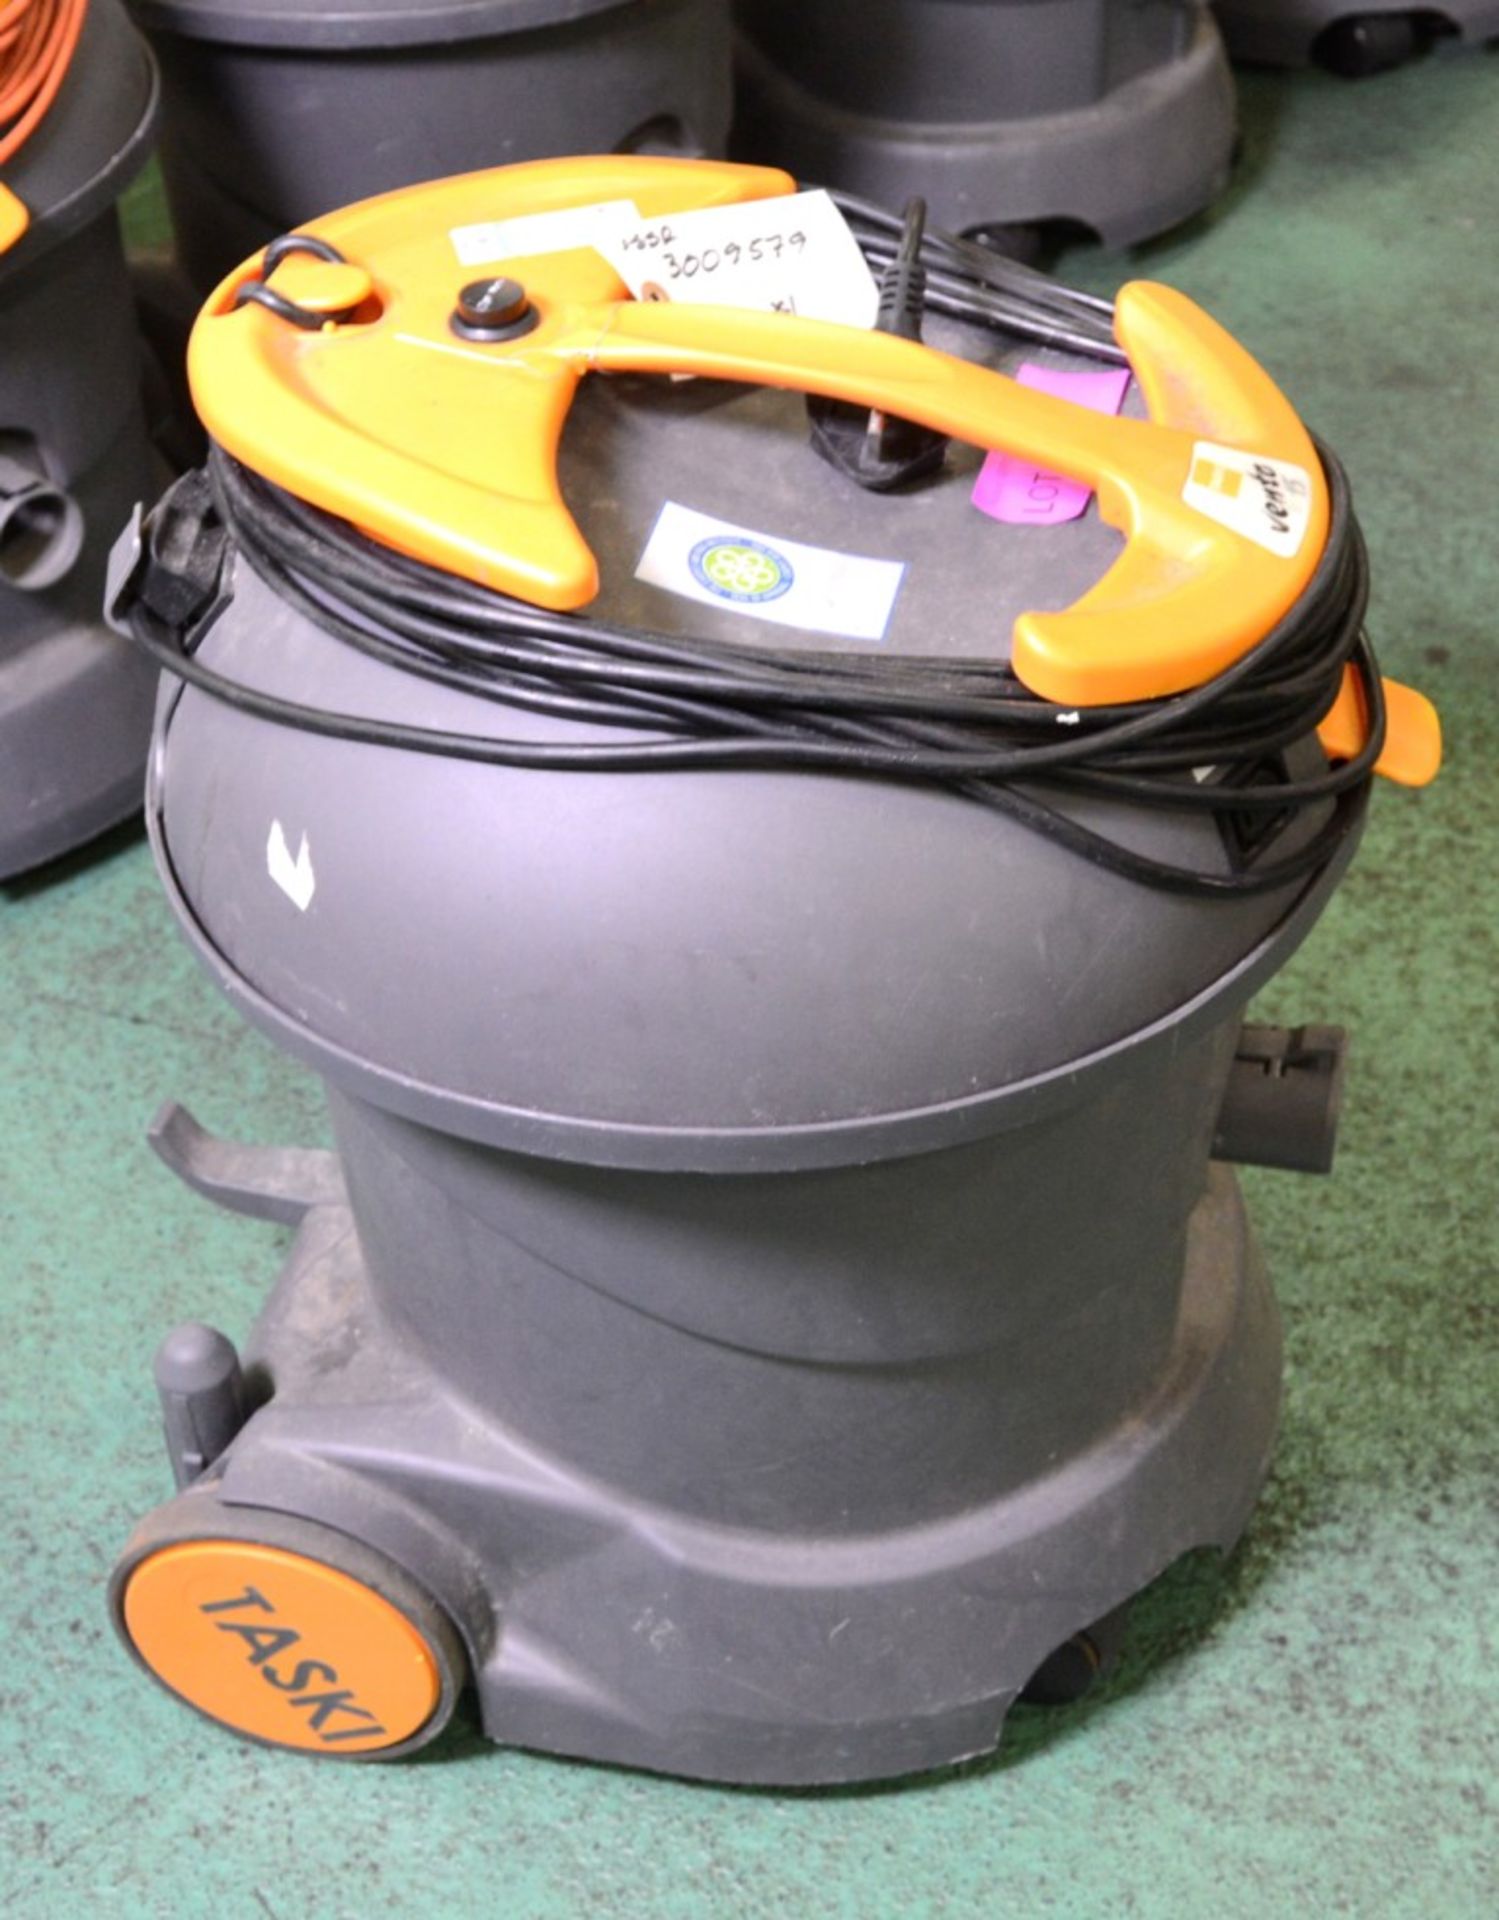 Taski Vento 15 Vacuum Cleaner - Image 2 of 2